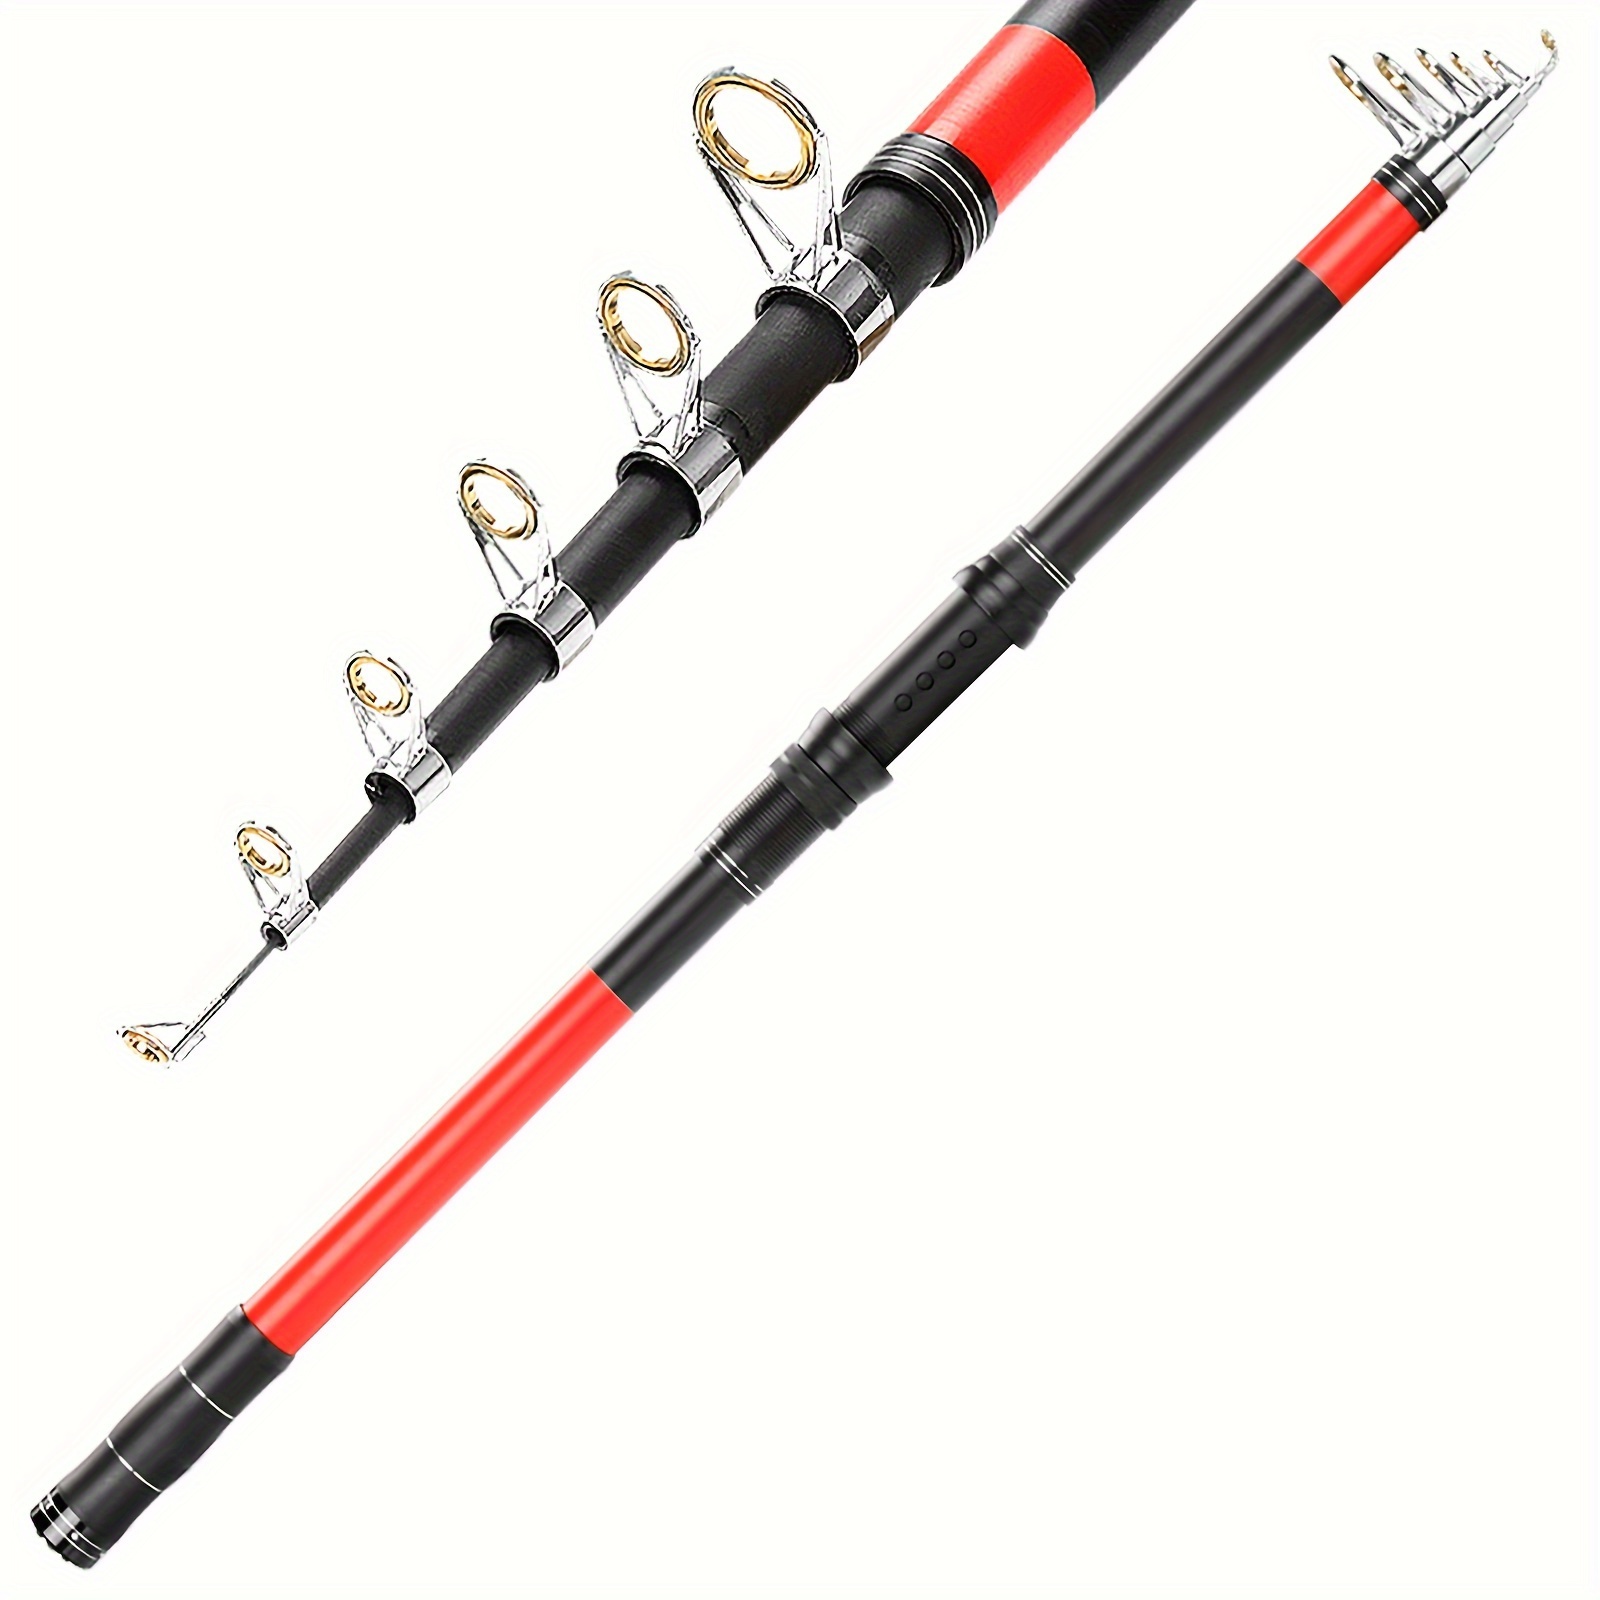 Sougayilang Feeder Fishing Rods Spinning Feeder Pole High - Temu